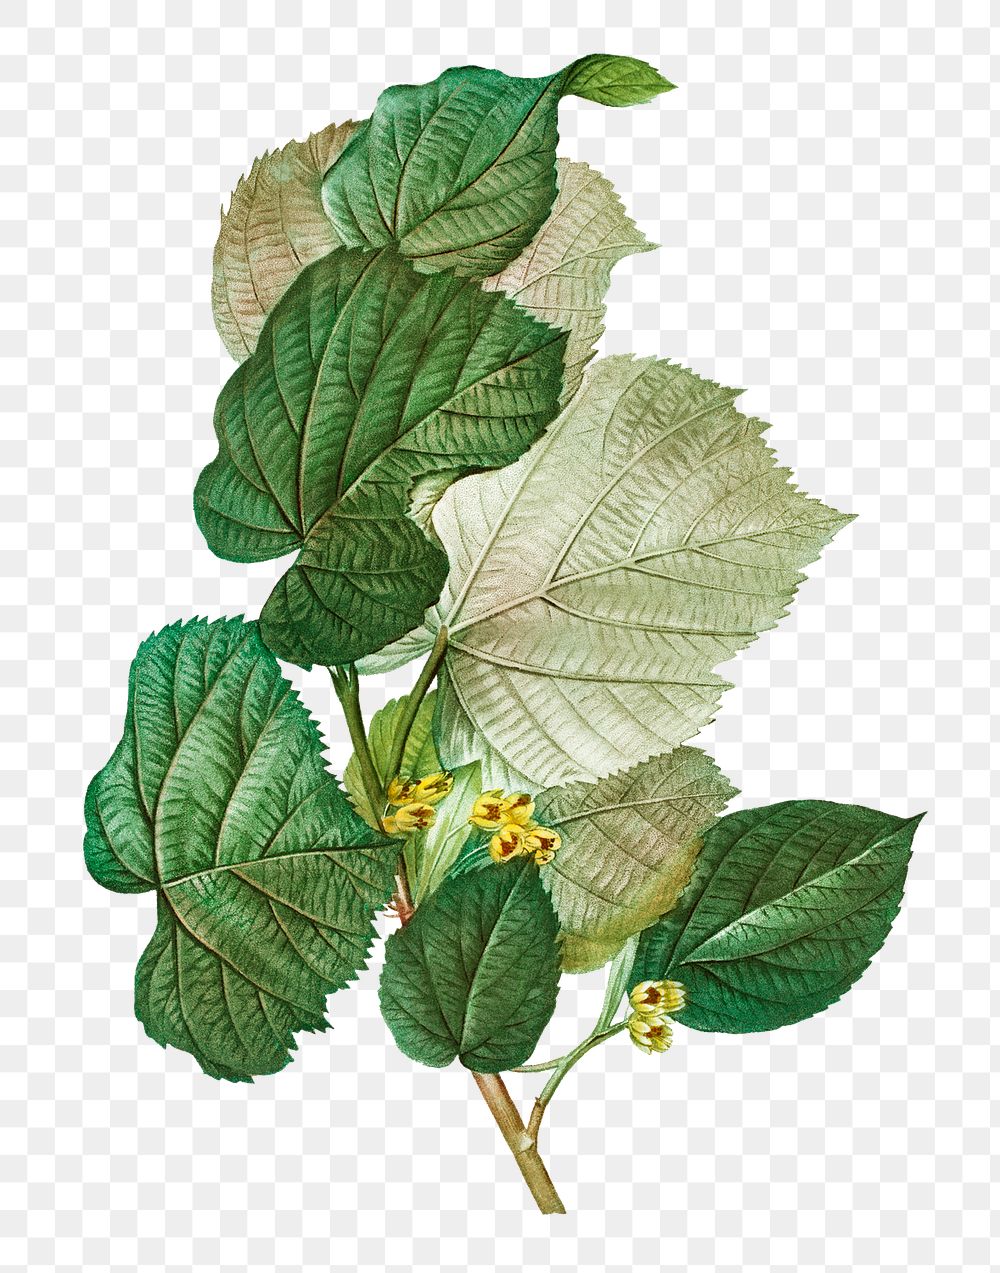 Tilia rotundifolia plant transparent png